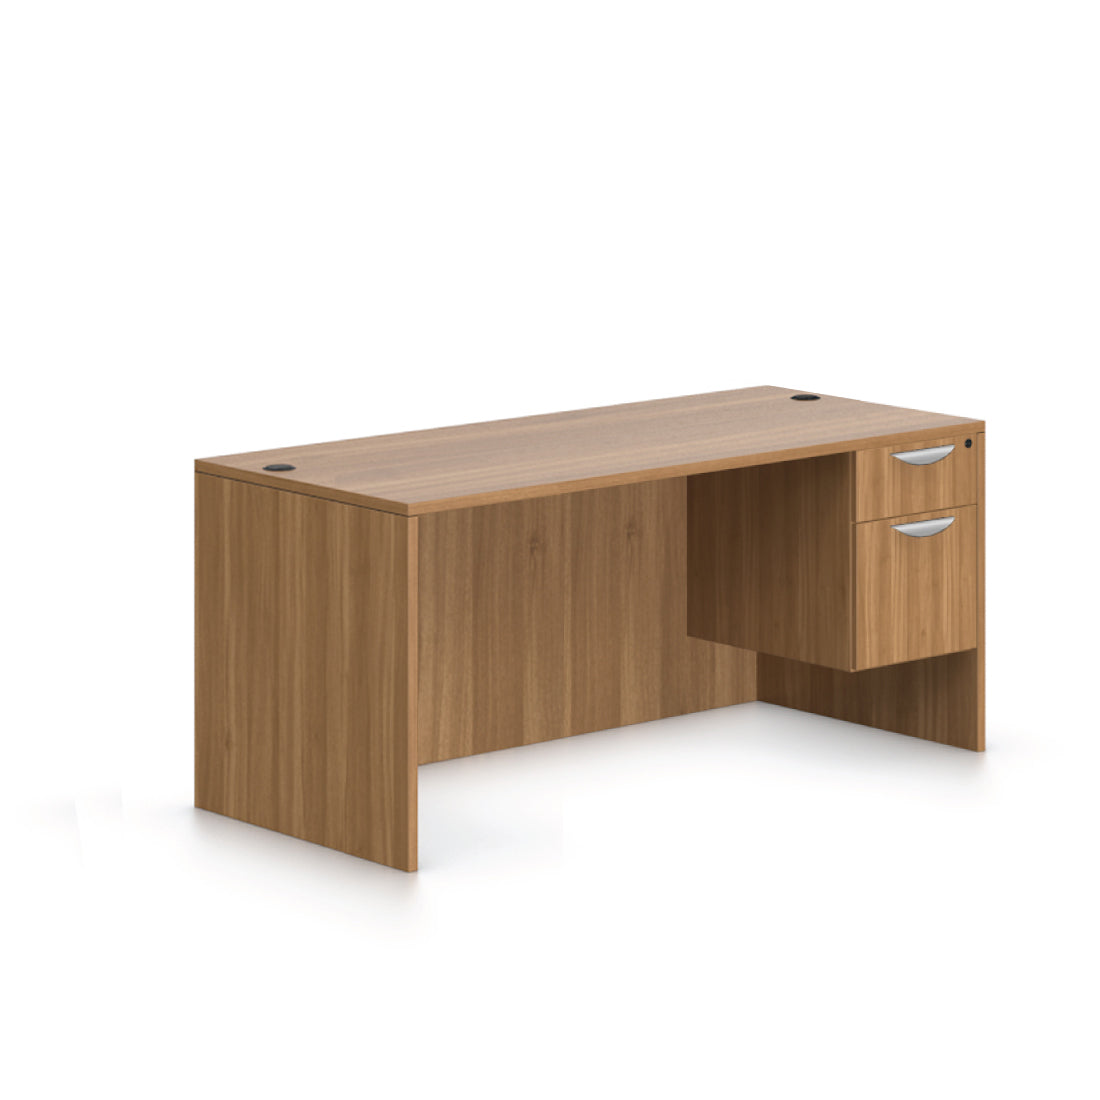 66"x30" Rectangular Desk with Hanging B/F pedestal - Kainosbuy.com